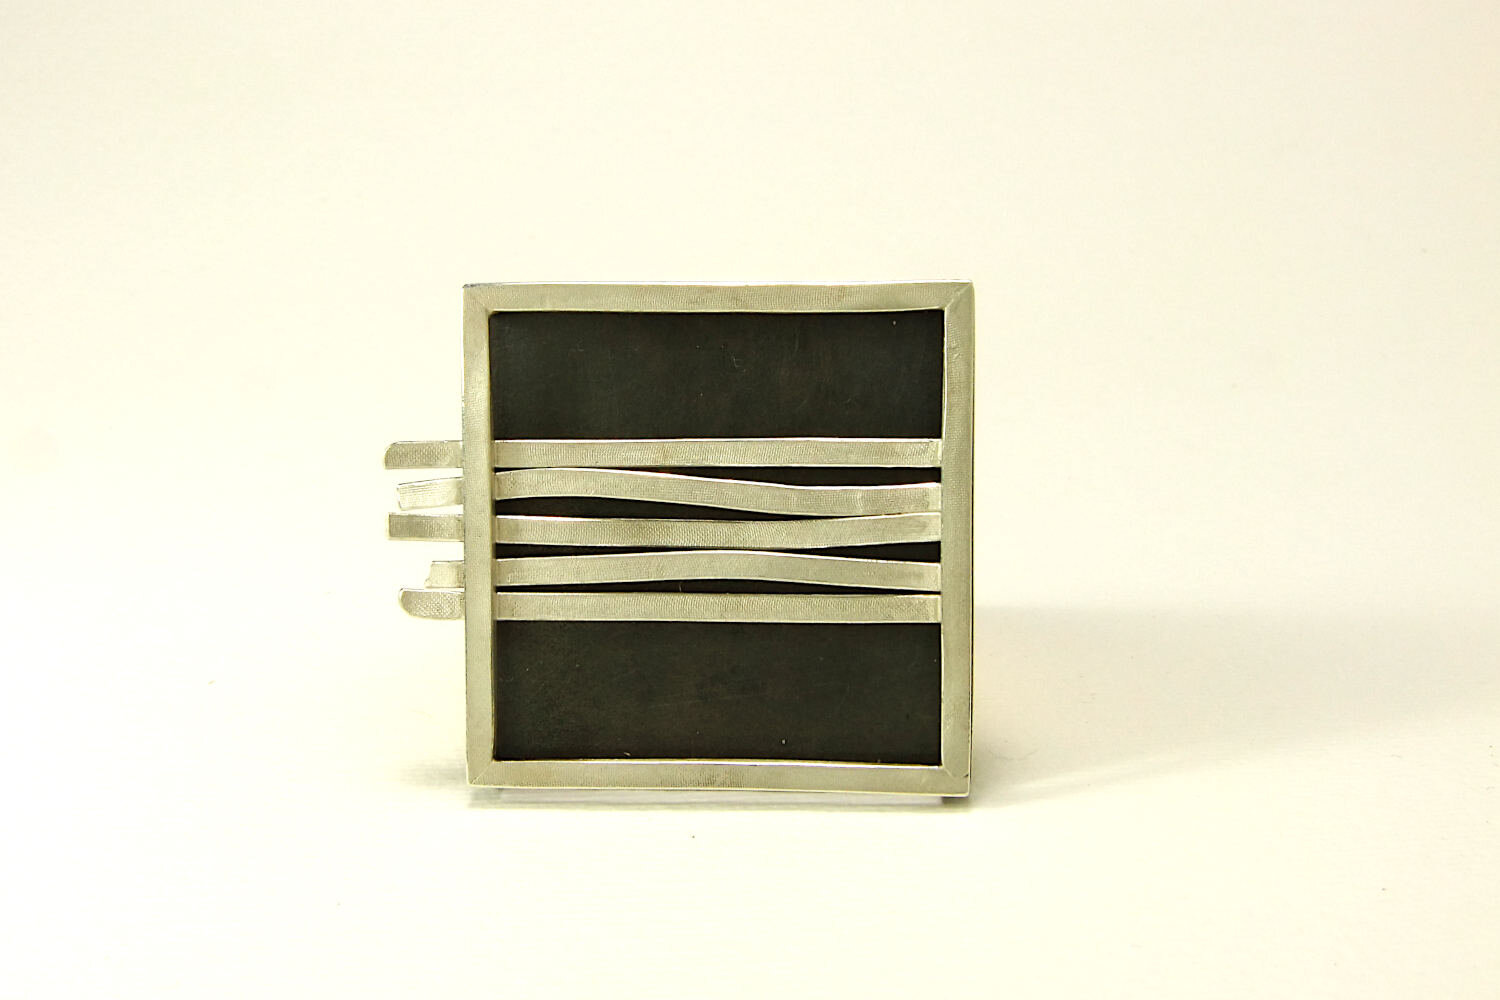 square-silver-brooch-hbm099-8591.JPG